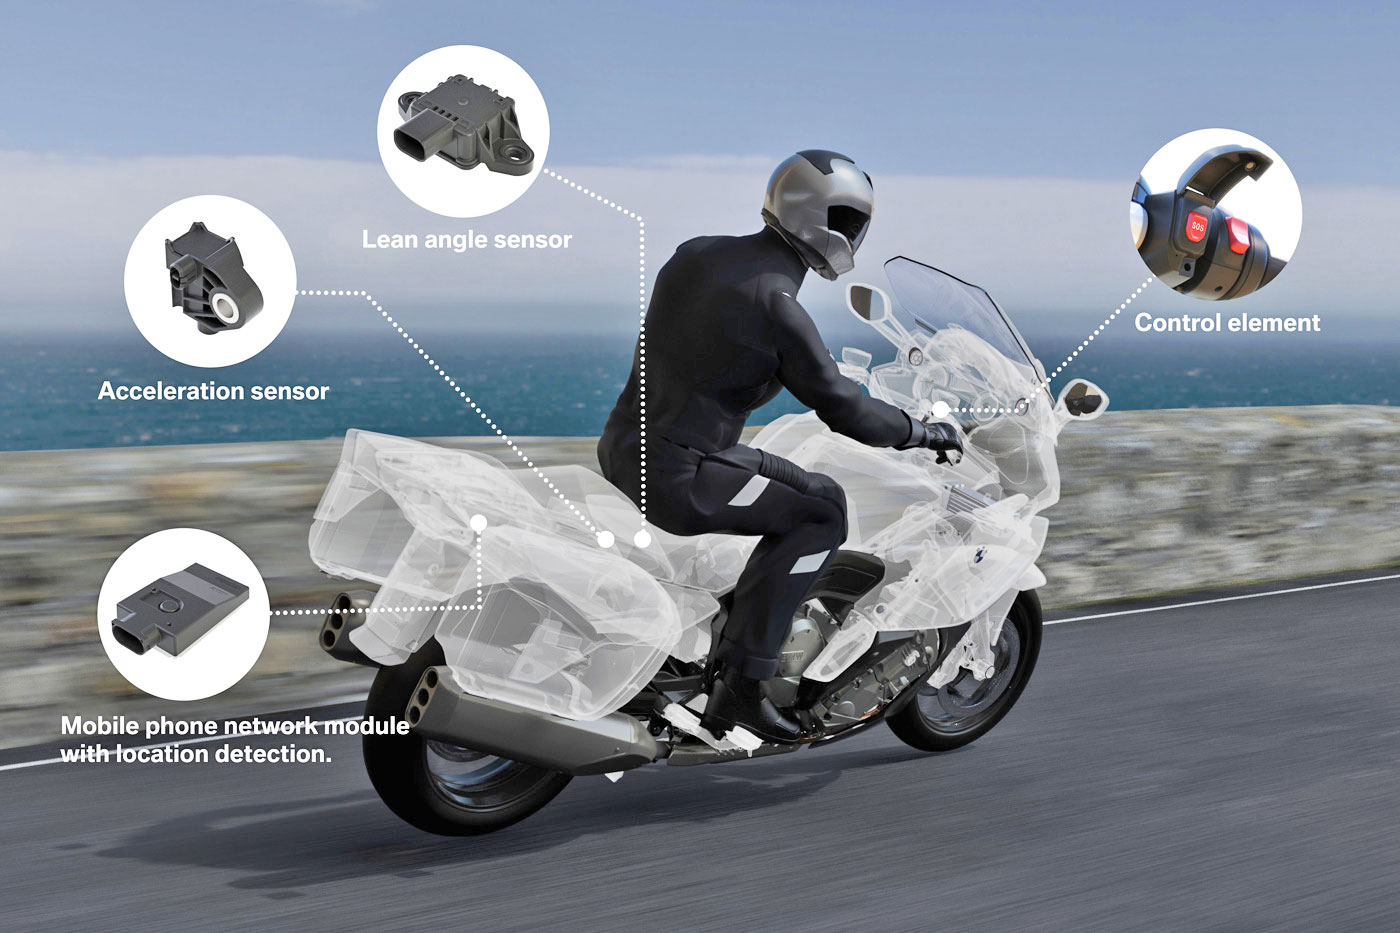 Bmw バイク向け自動救急要請システムを発表 事故の大きさに応じ通報内容を自動選択 Engadget 日本版